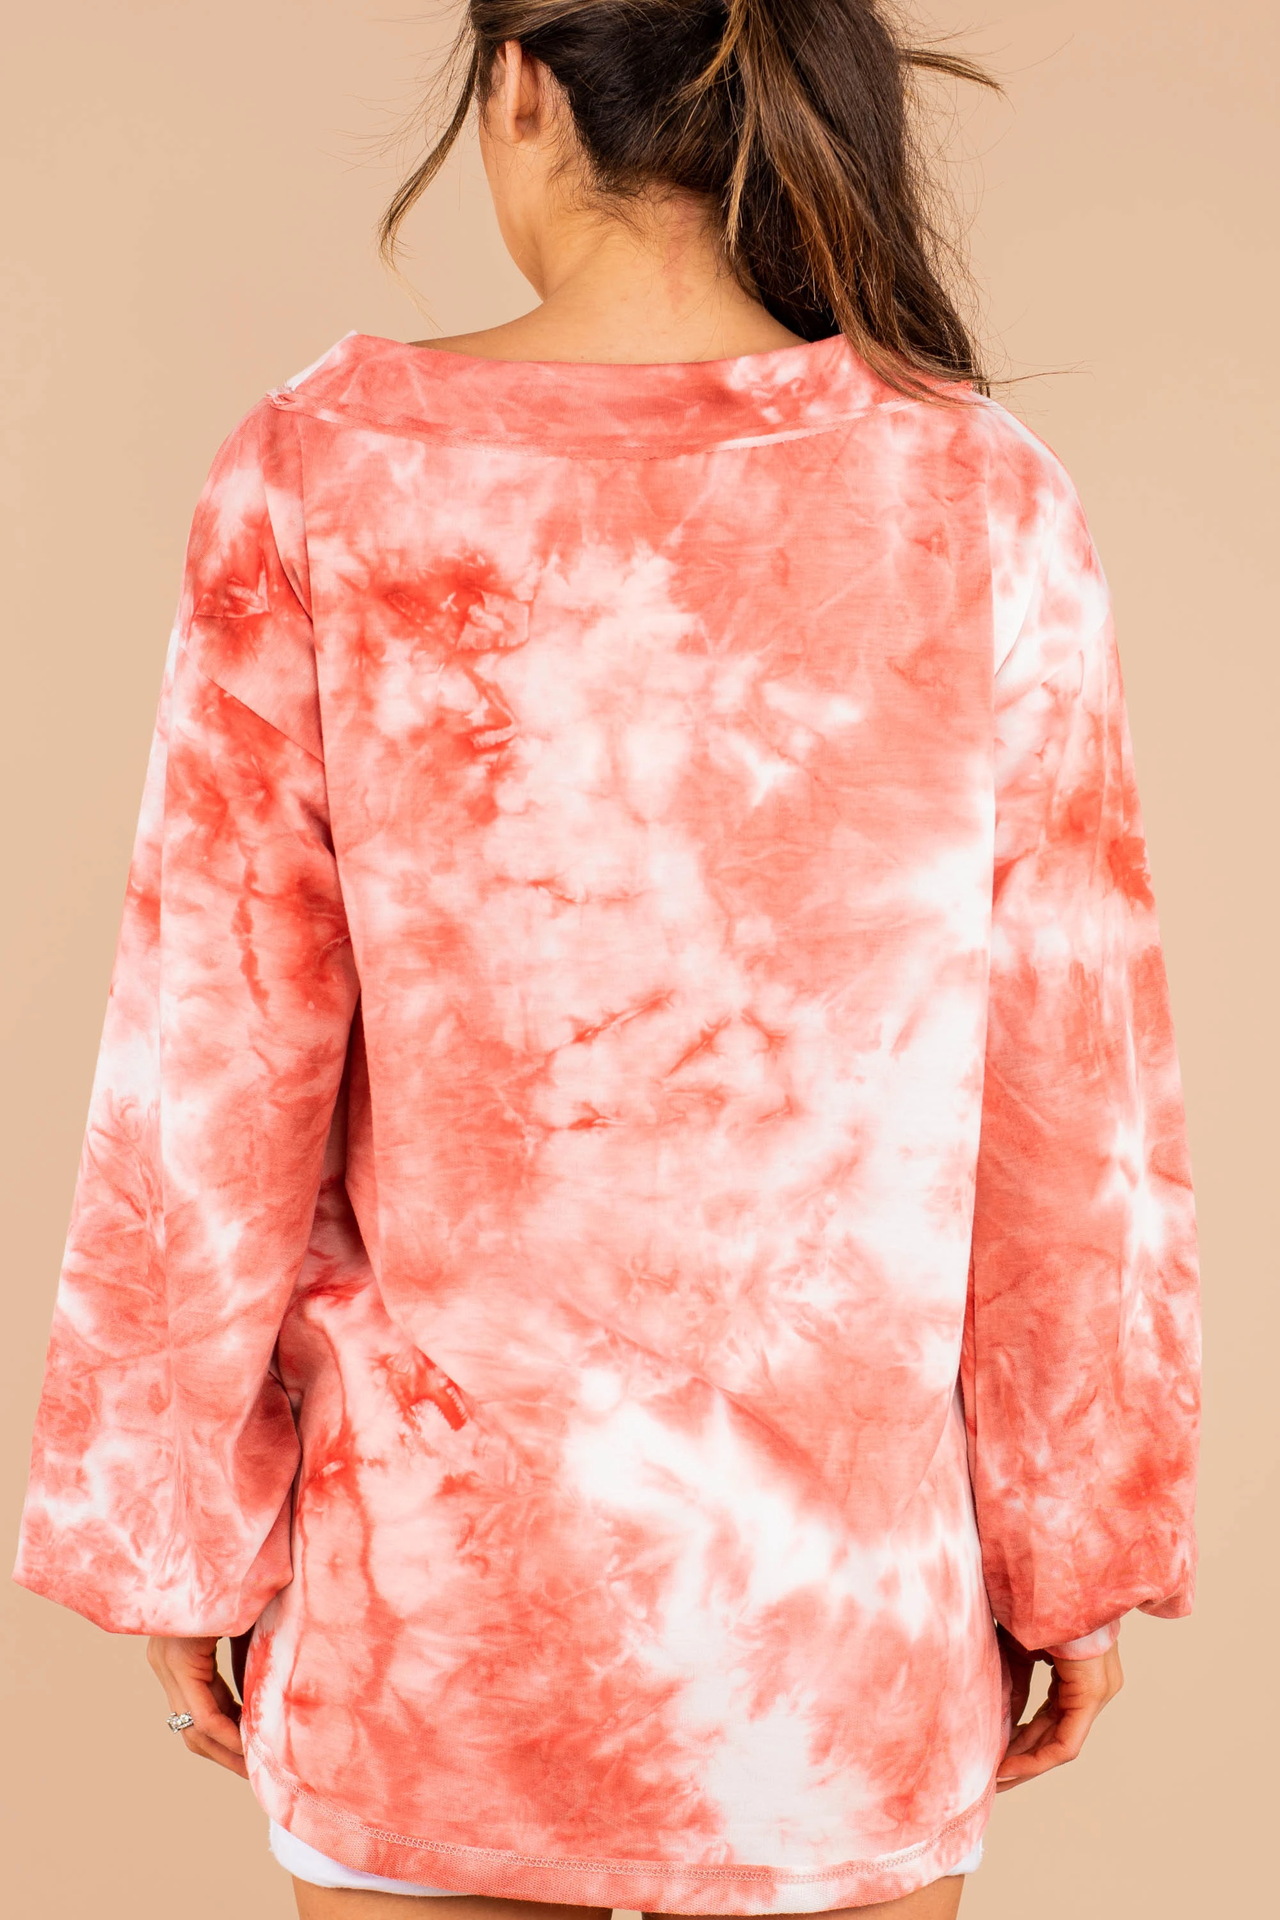 Tie-dye printing v-neck long sleeve polyester pullover casual blouse NSHYG66729